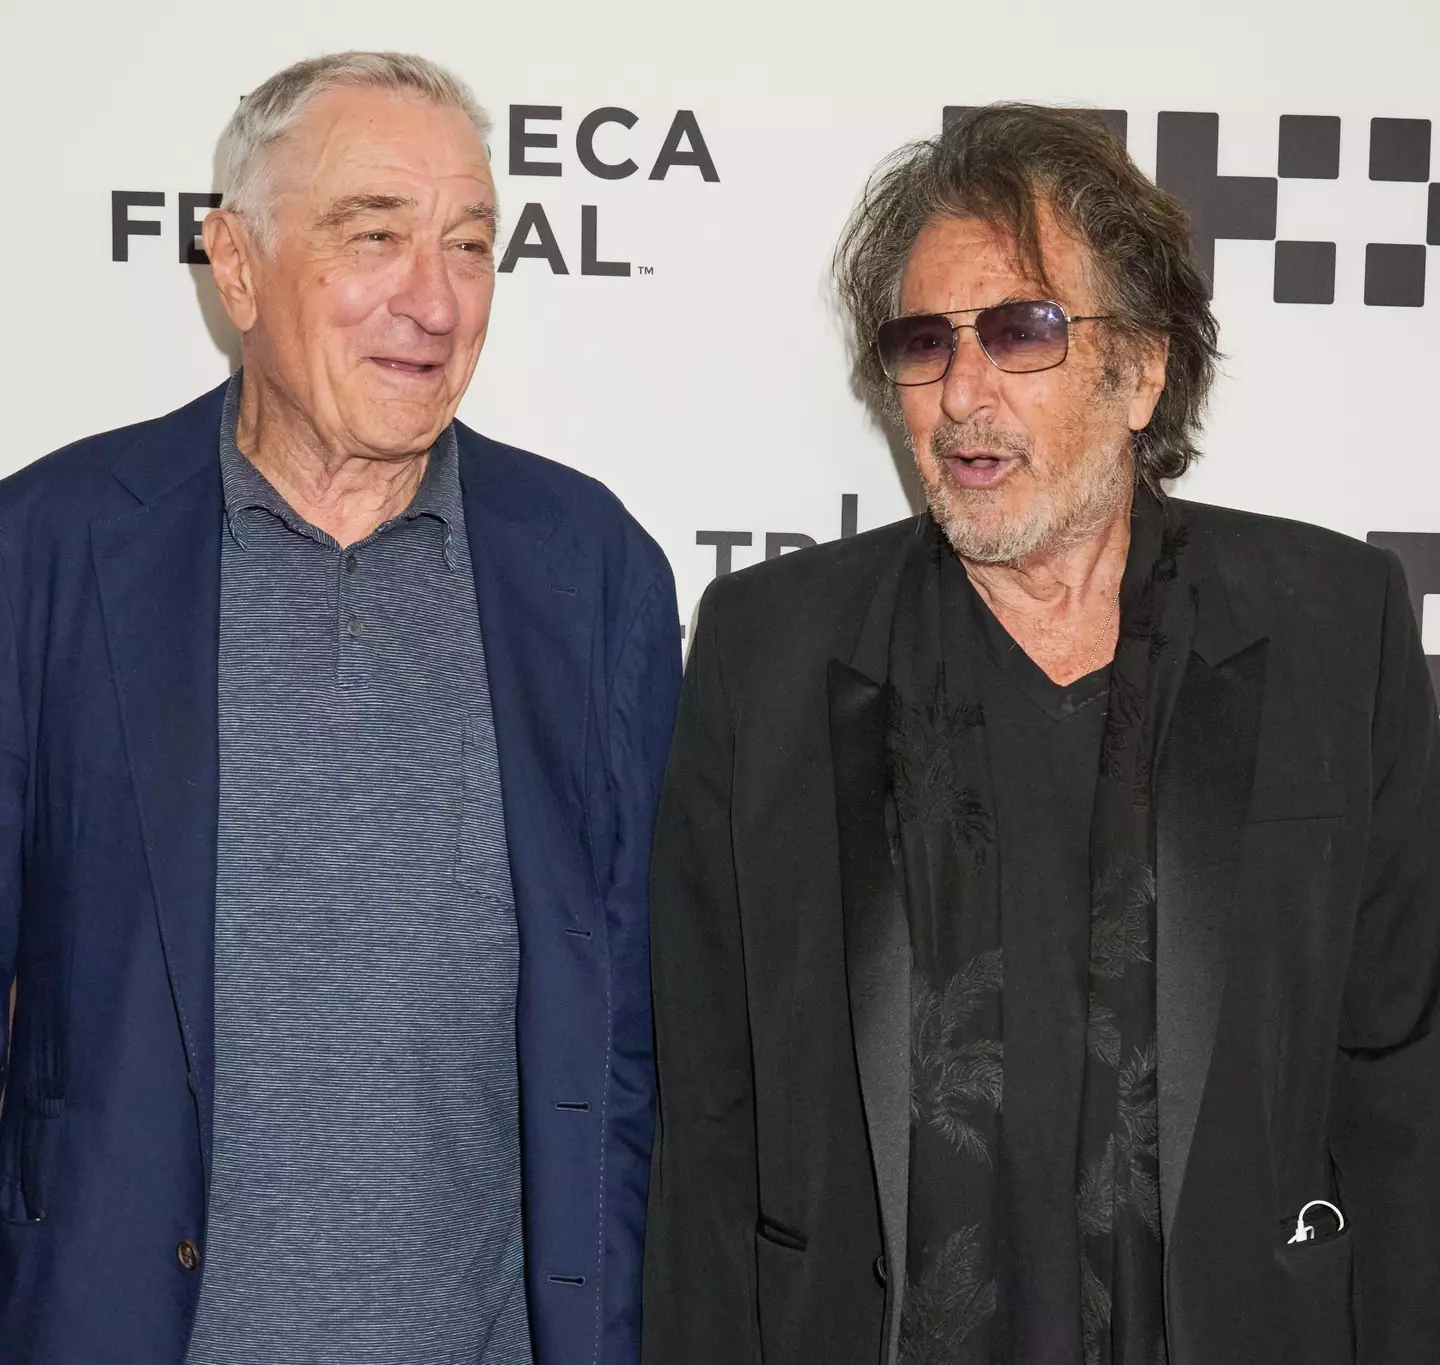 Robert De Niro has responded to Al Pacino becoming a father at 83.